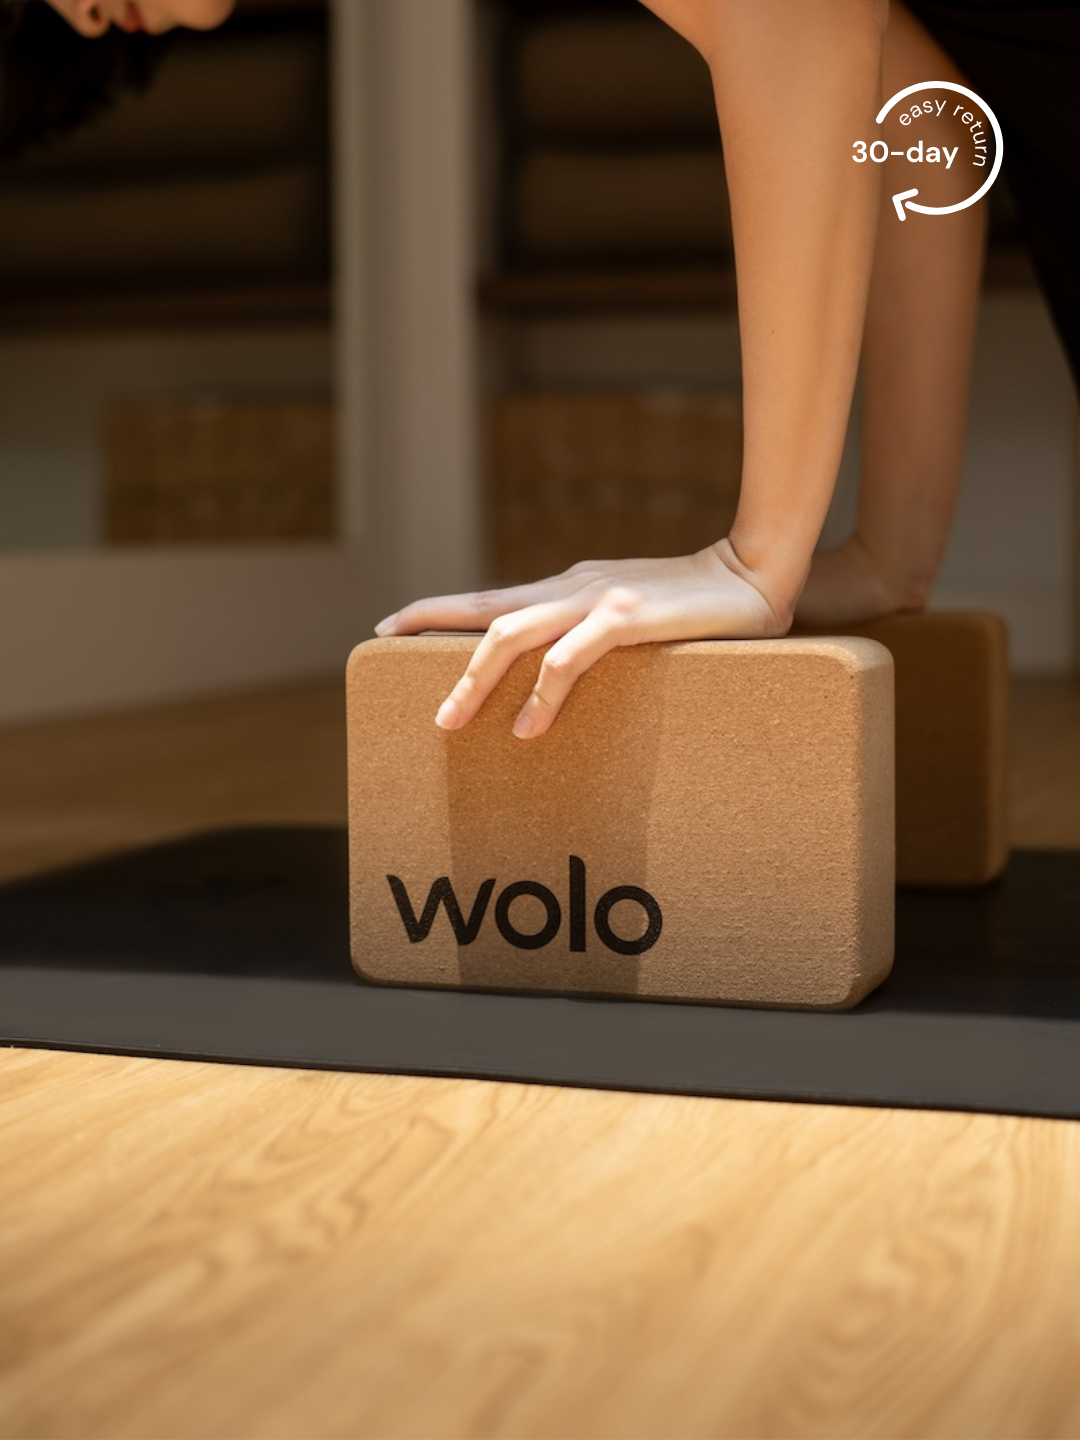 Yoga pose with a cork yoga block